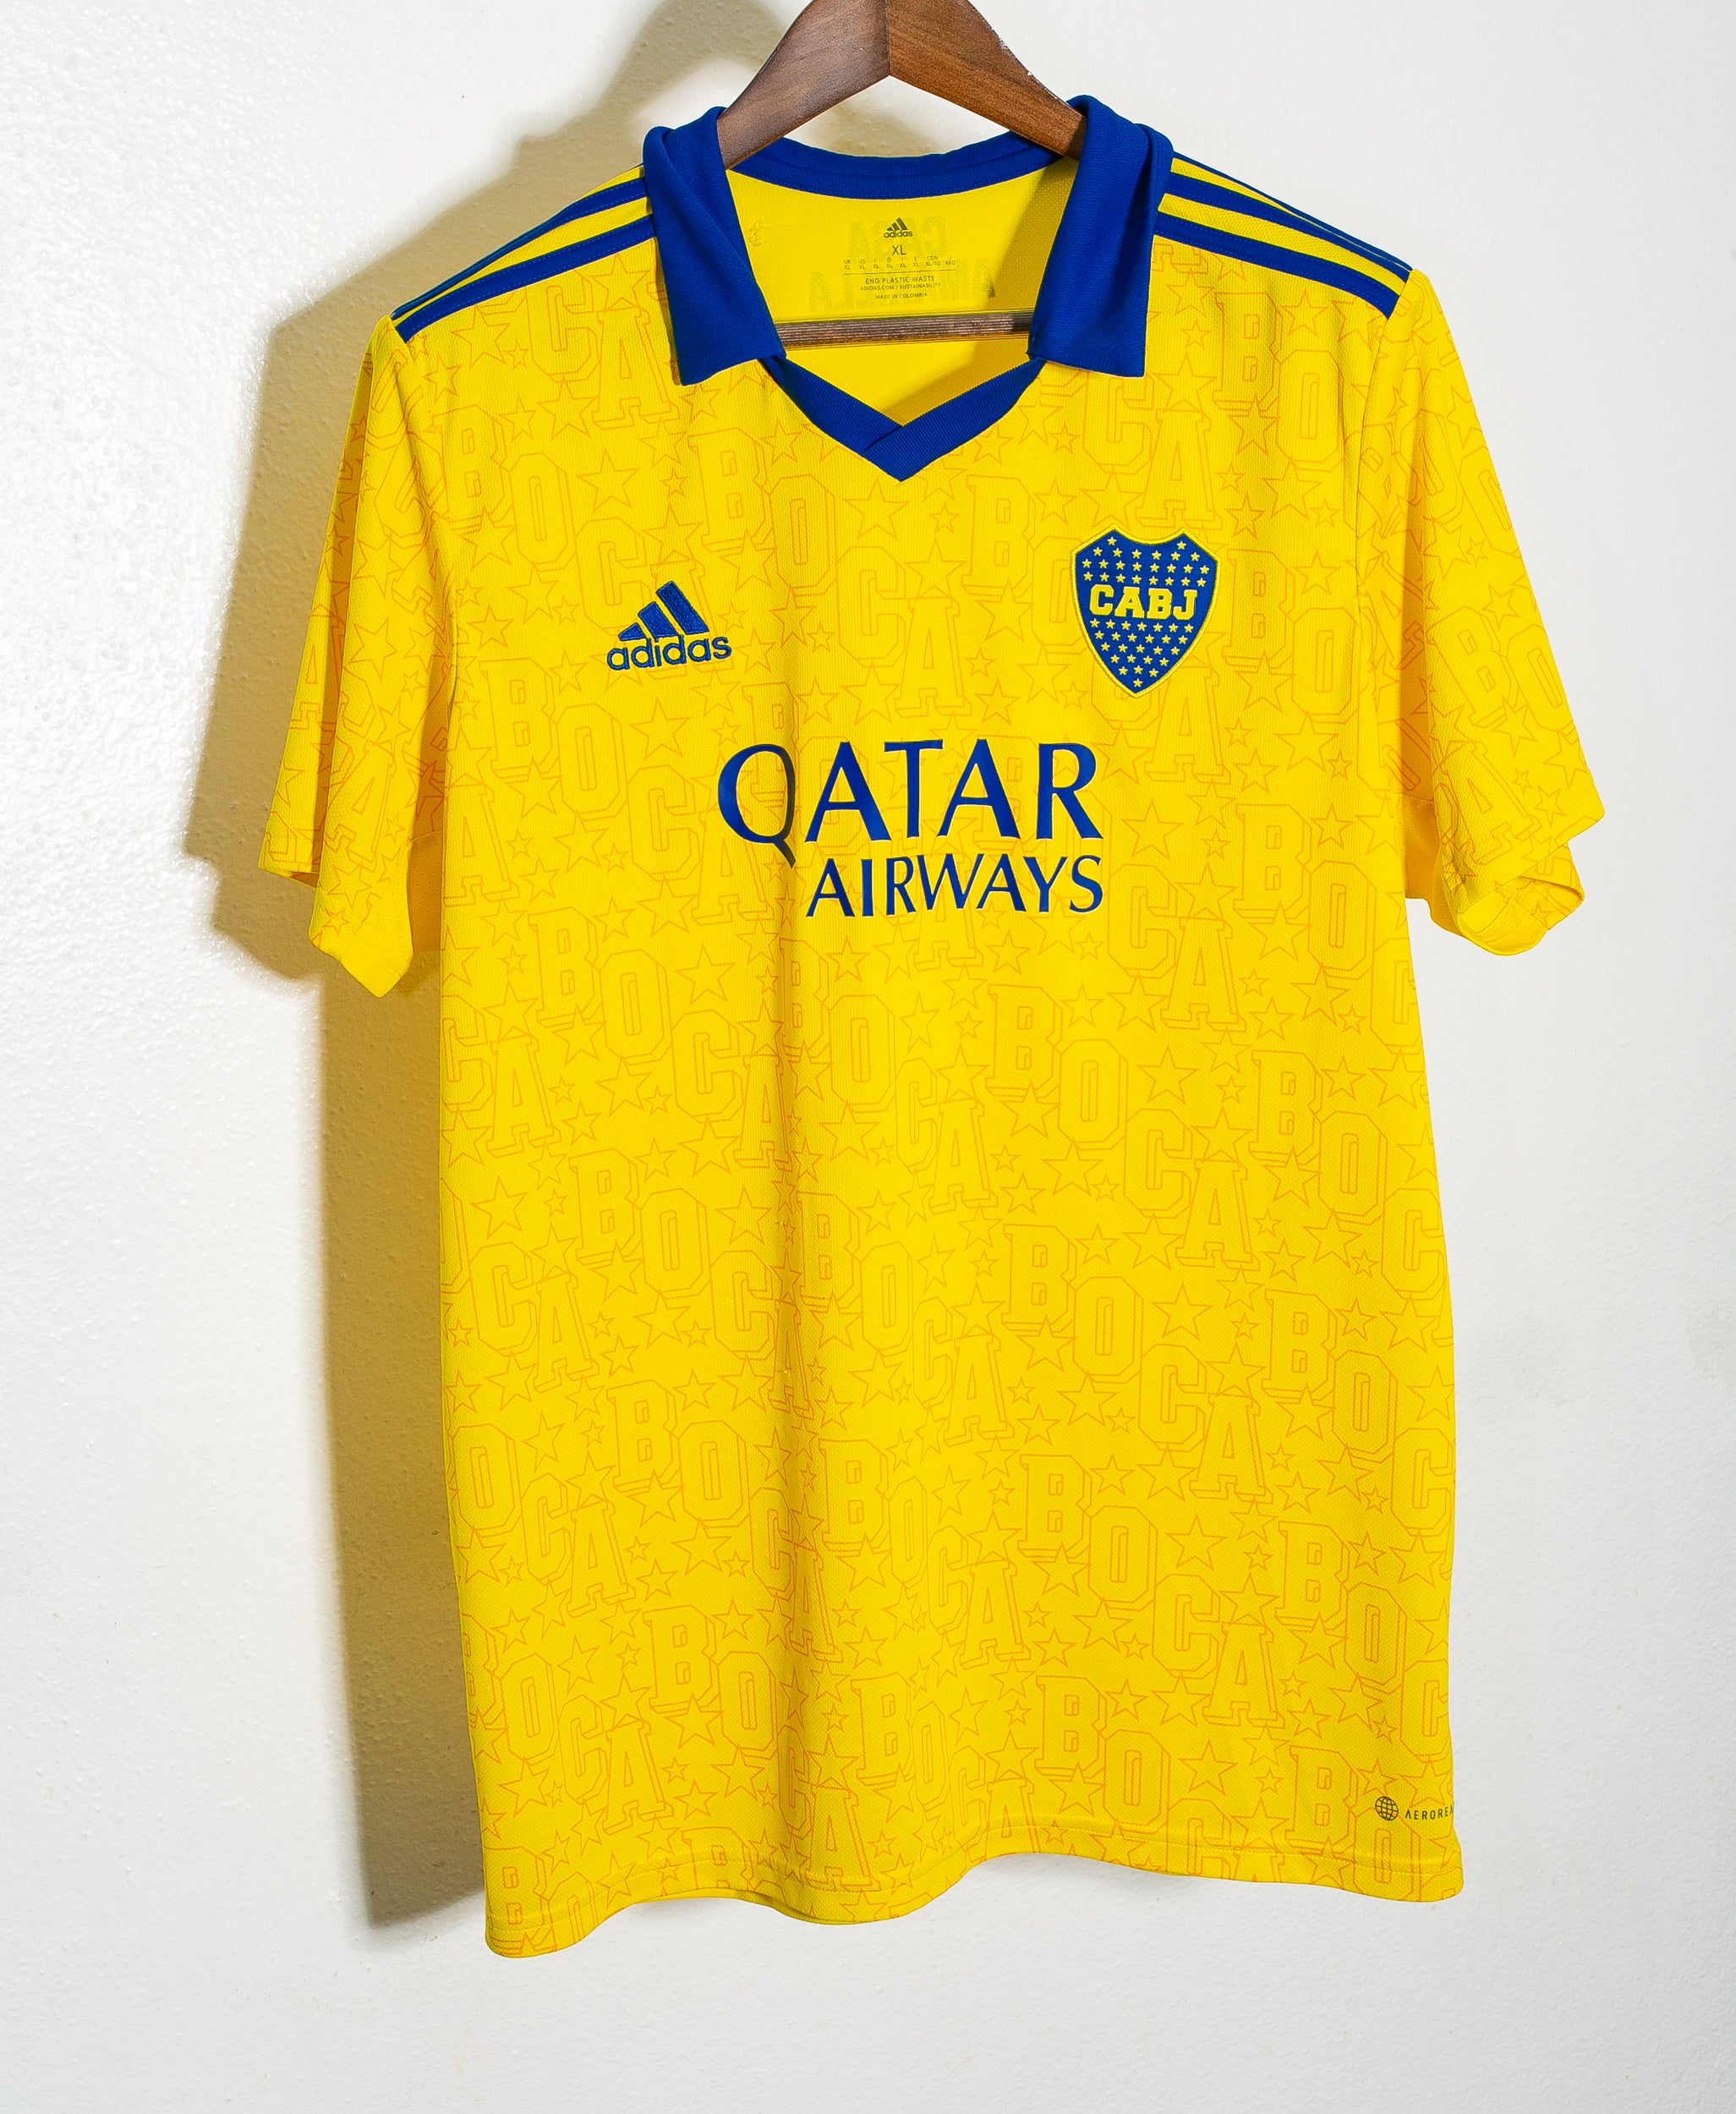 Vintage Soccer Jersey, Nike Argentina Primera Division Boca Juniors 2000 Home Authentic Nike Jersey Camiseta Extra-Large